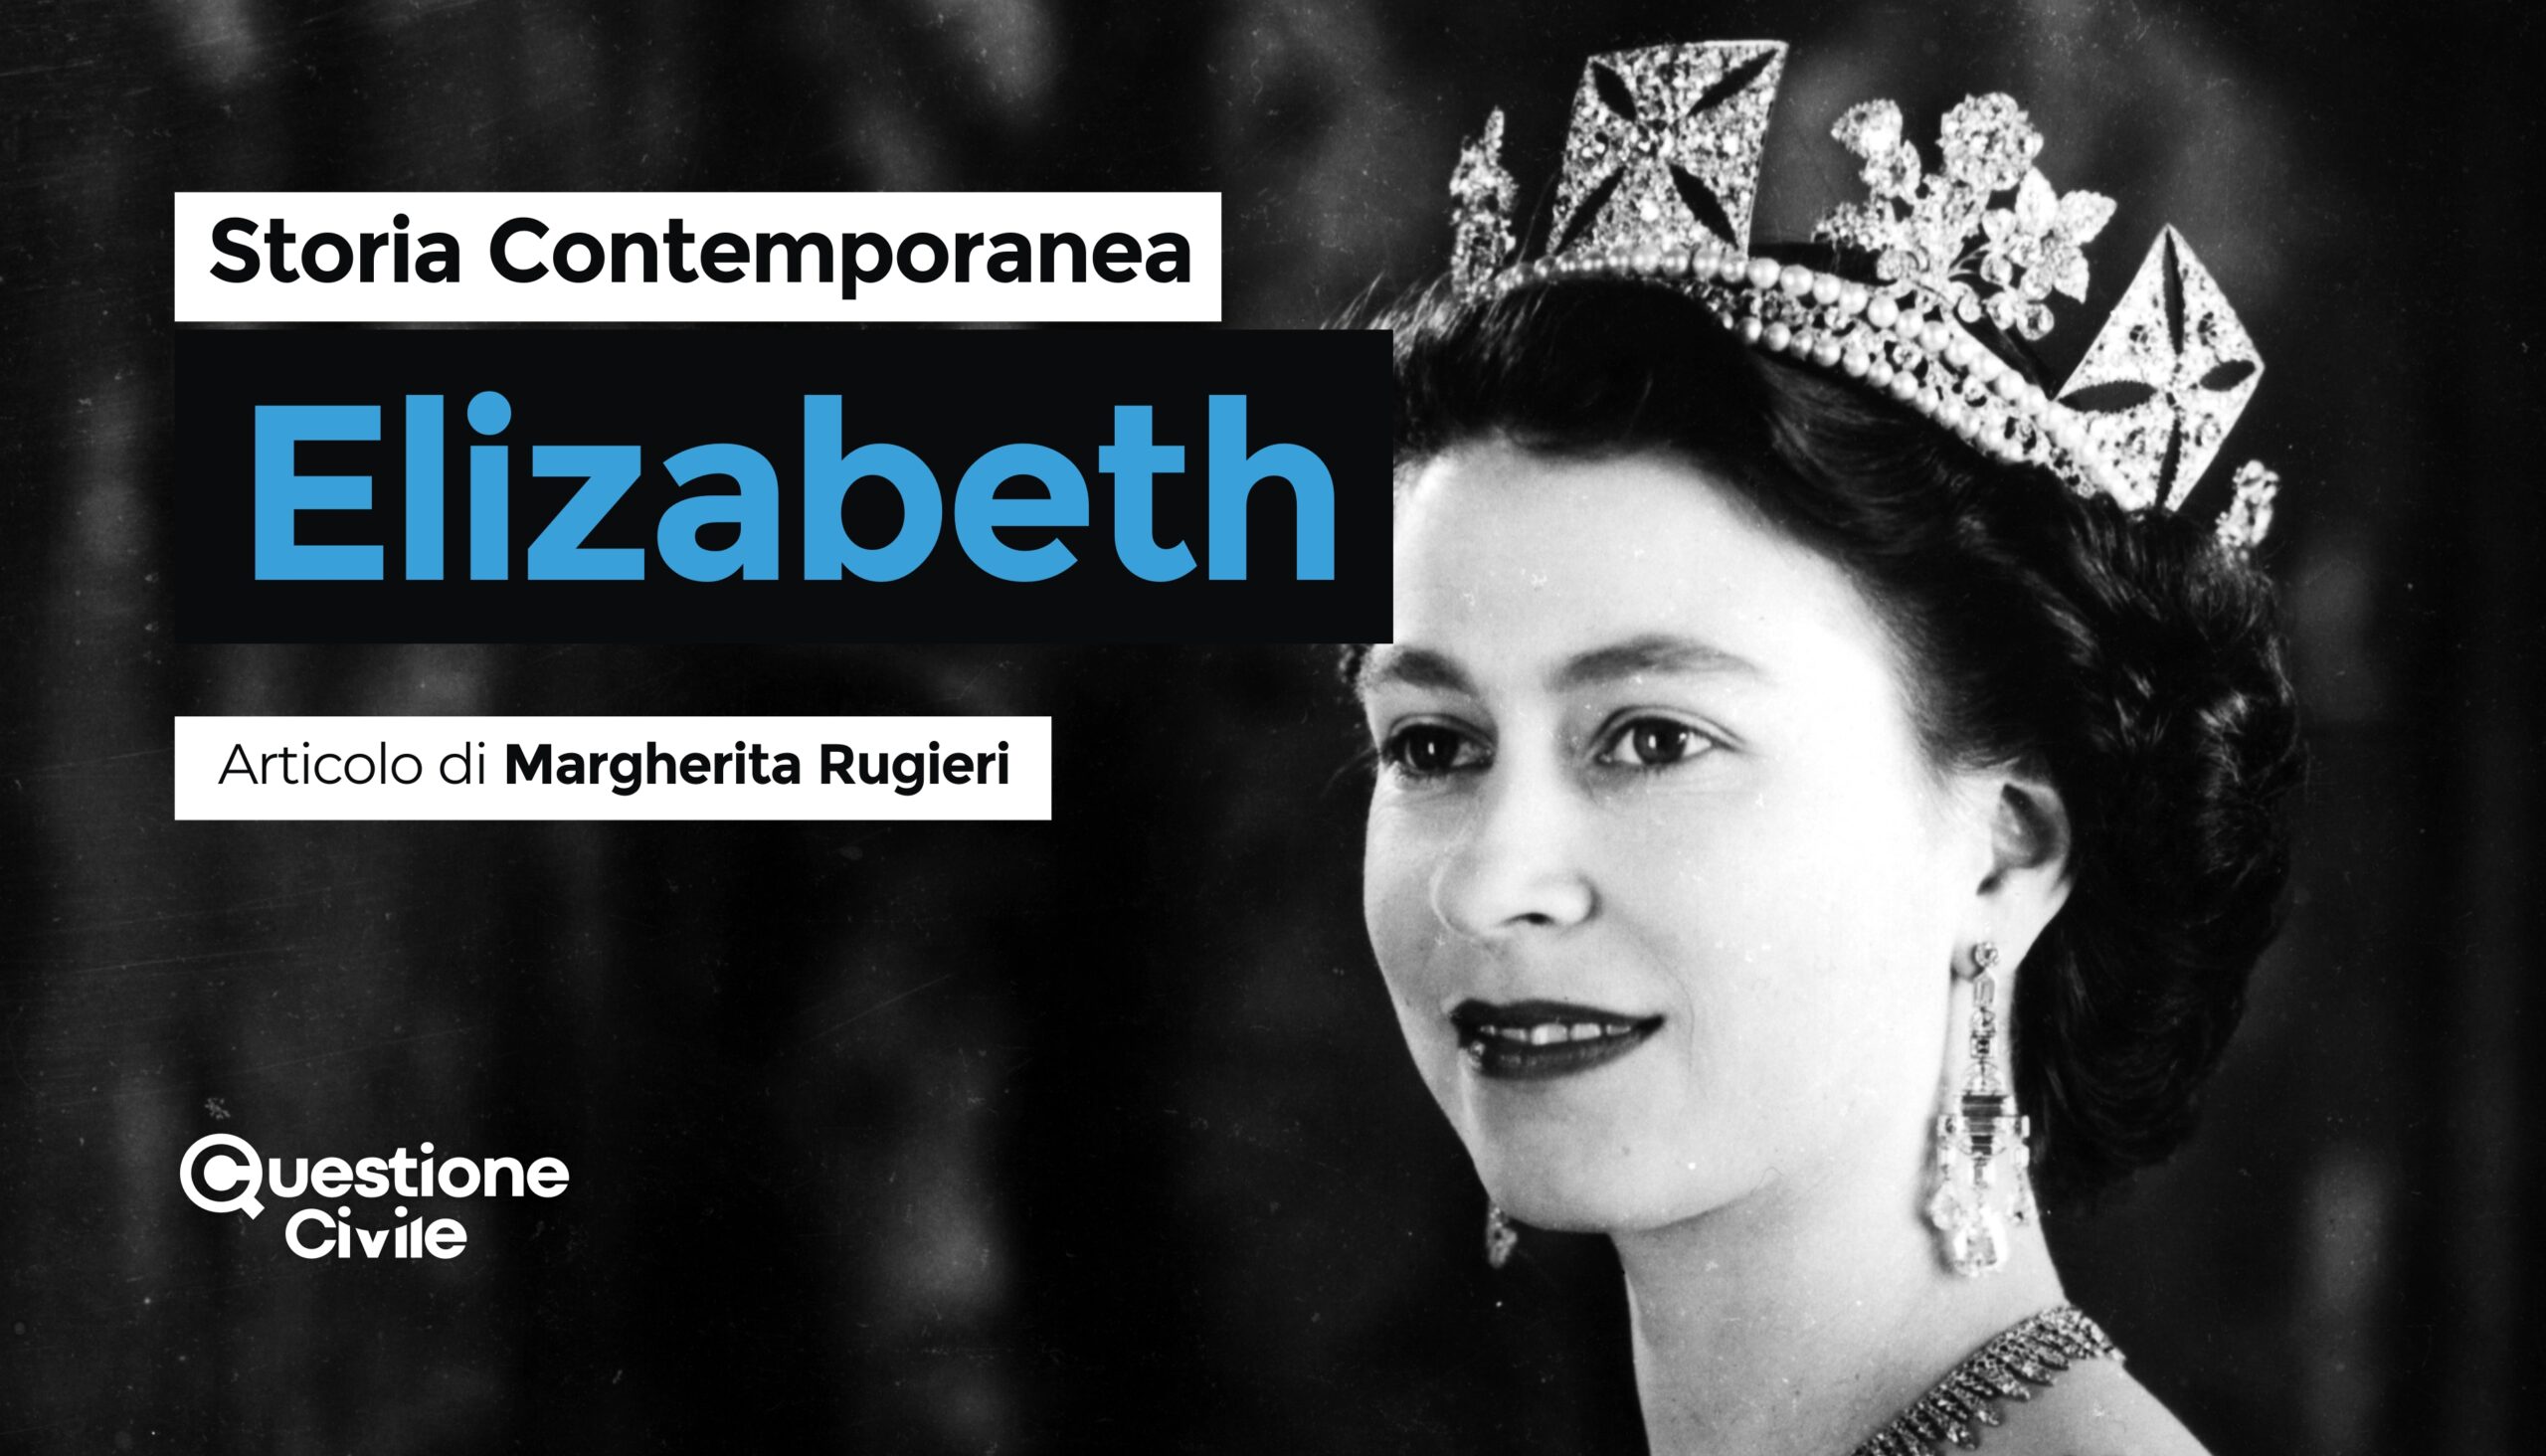 Elisabetta II